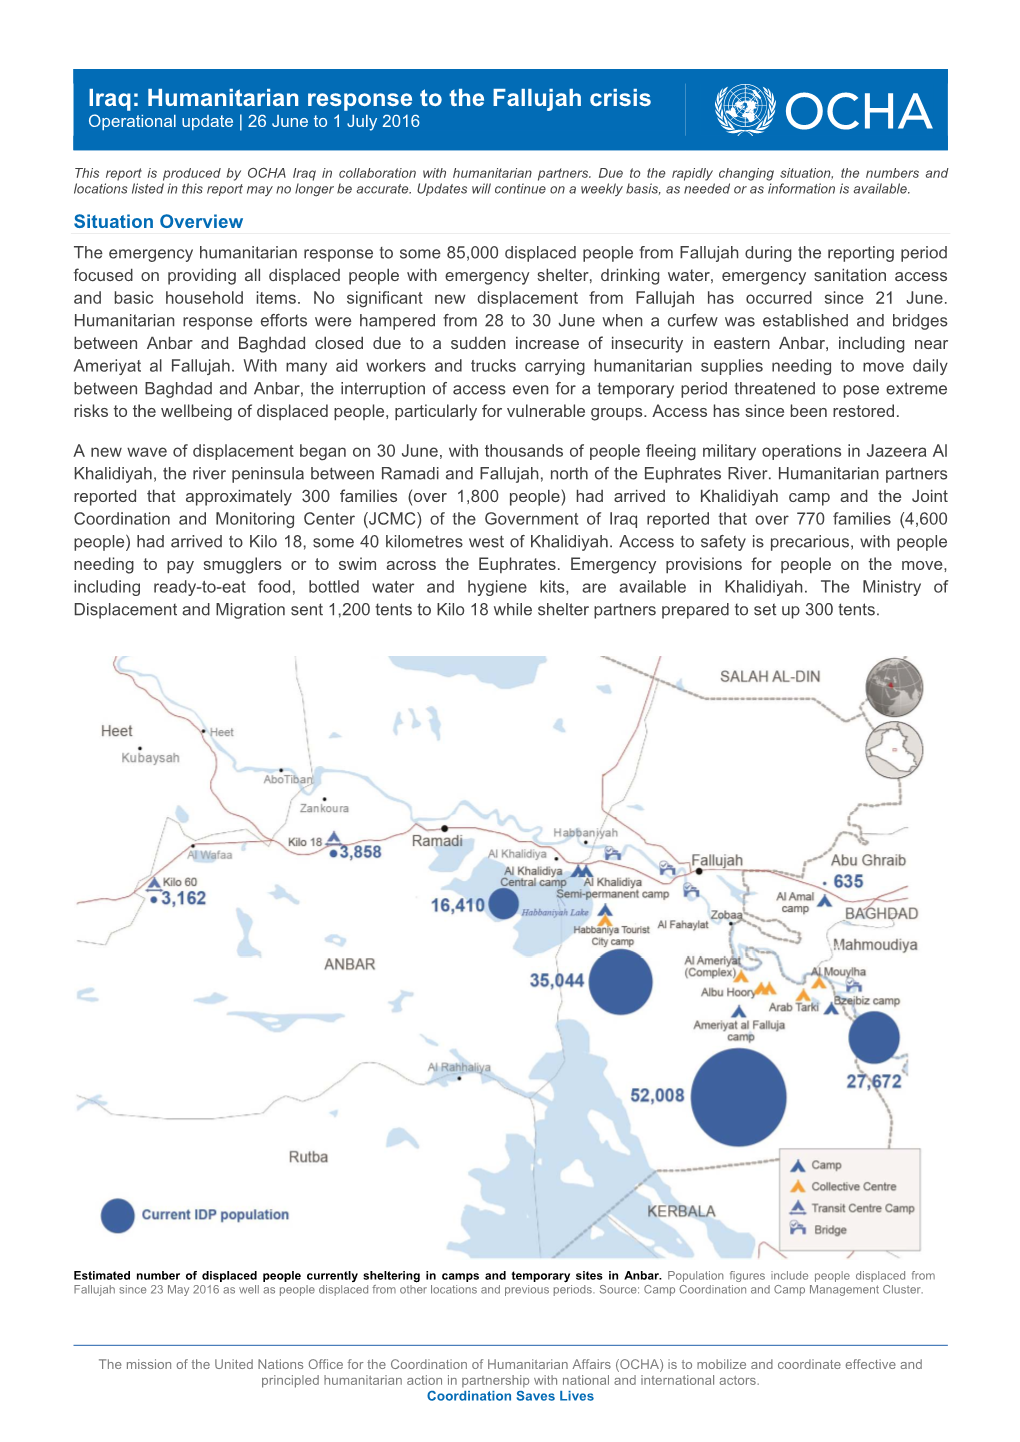 Iraq: Humanitarian Response to the Fallujah Crisis Operational Update | 26 June to 1 July 2016